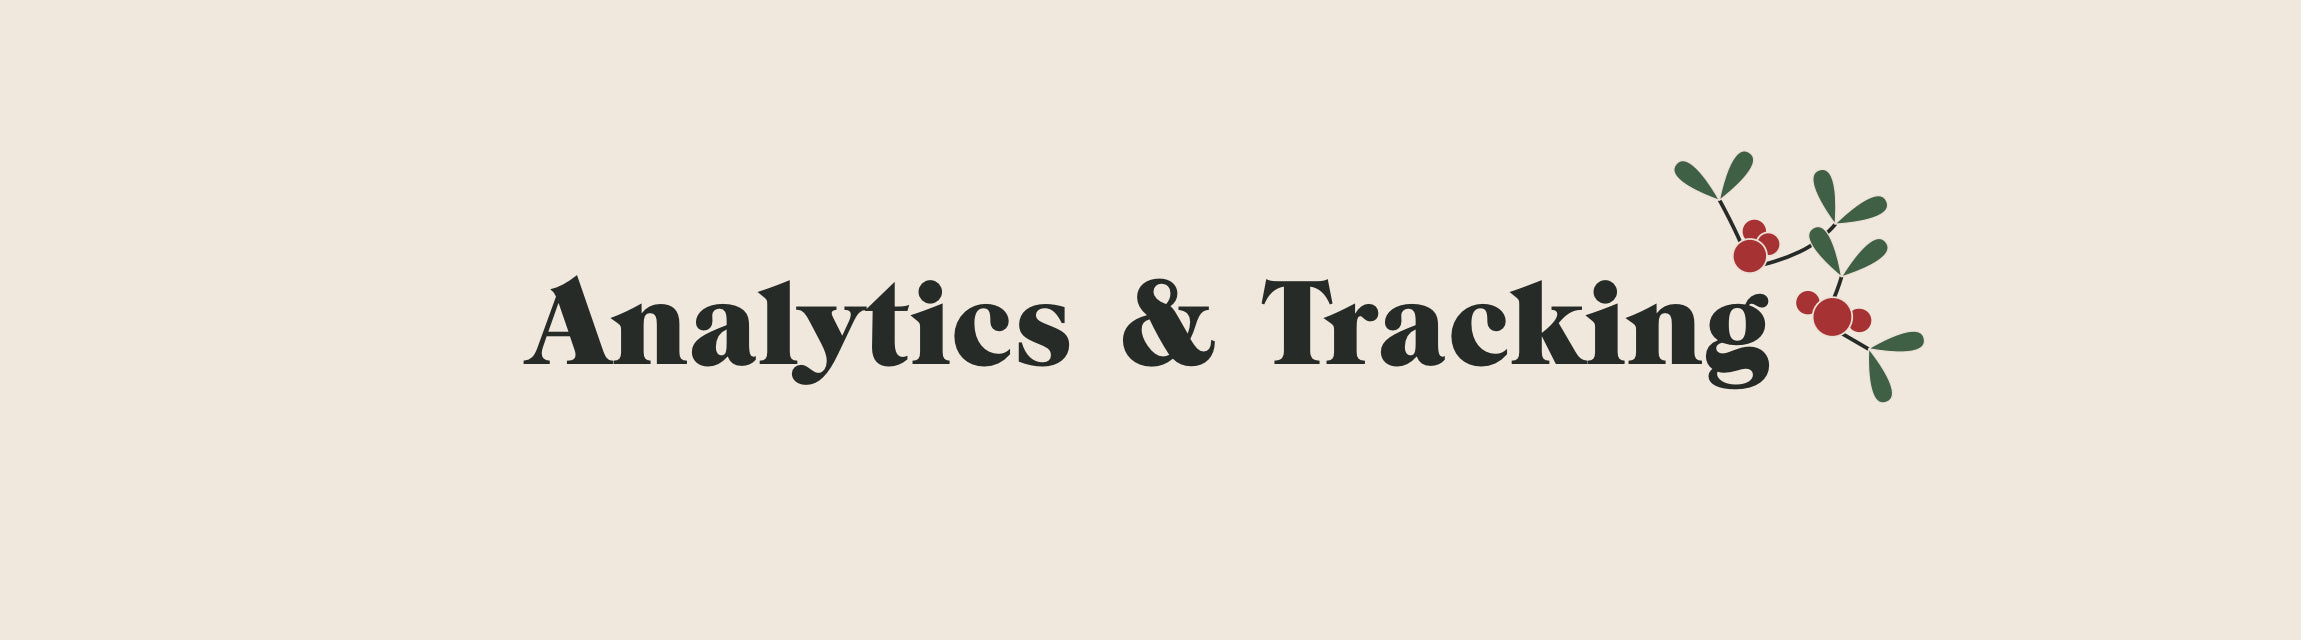 Analytics & Tracking title with mistletoe icon